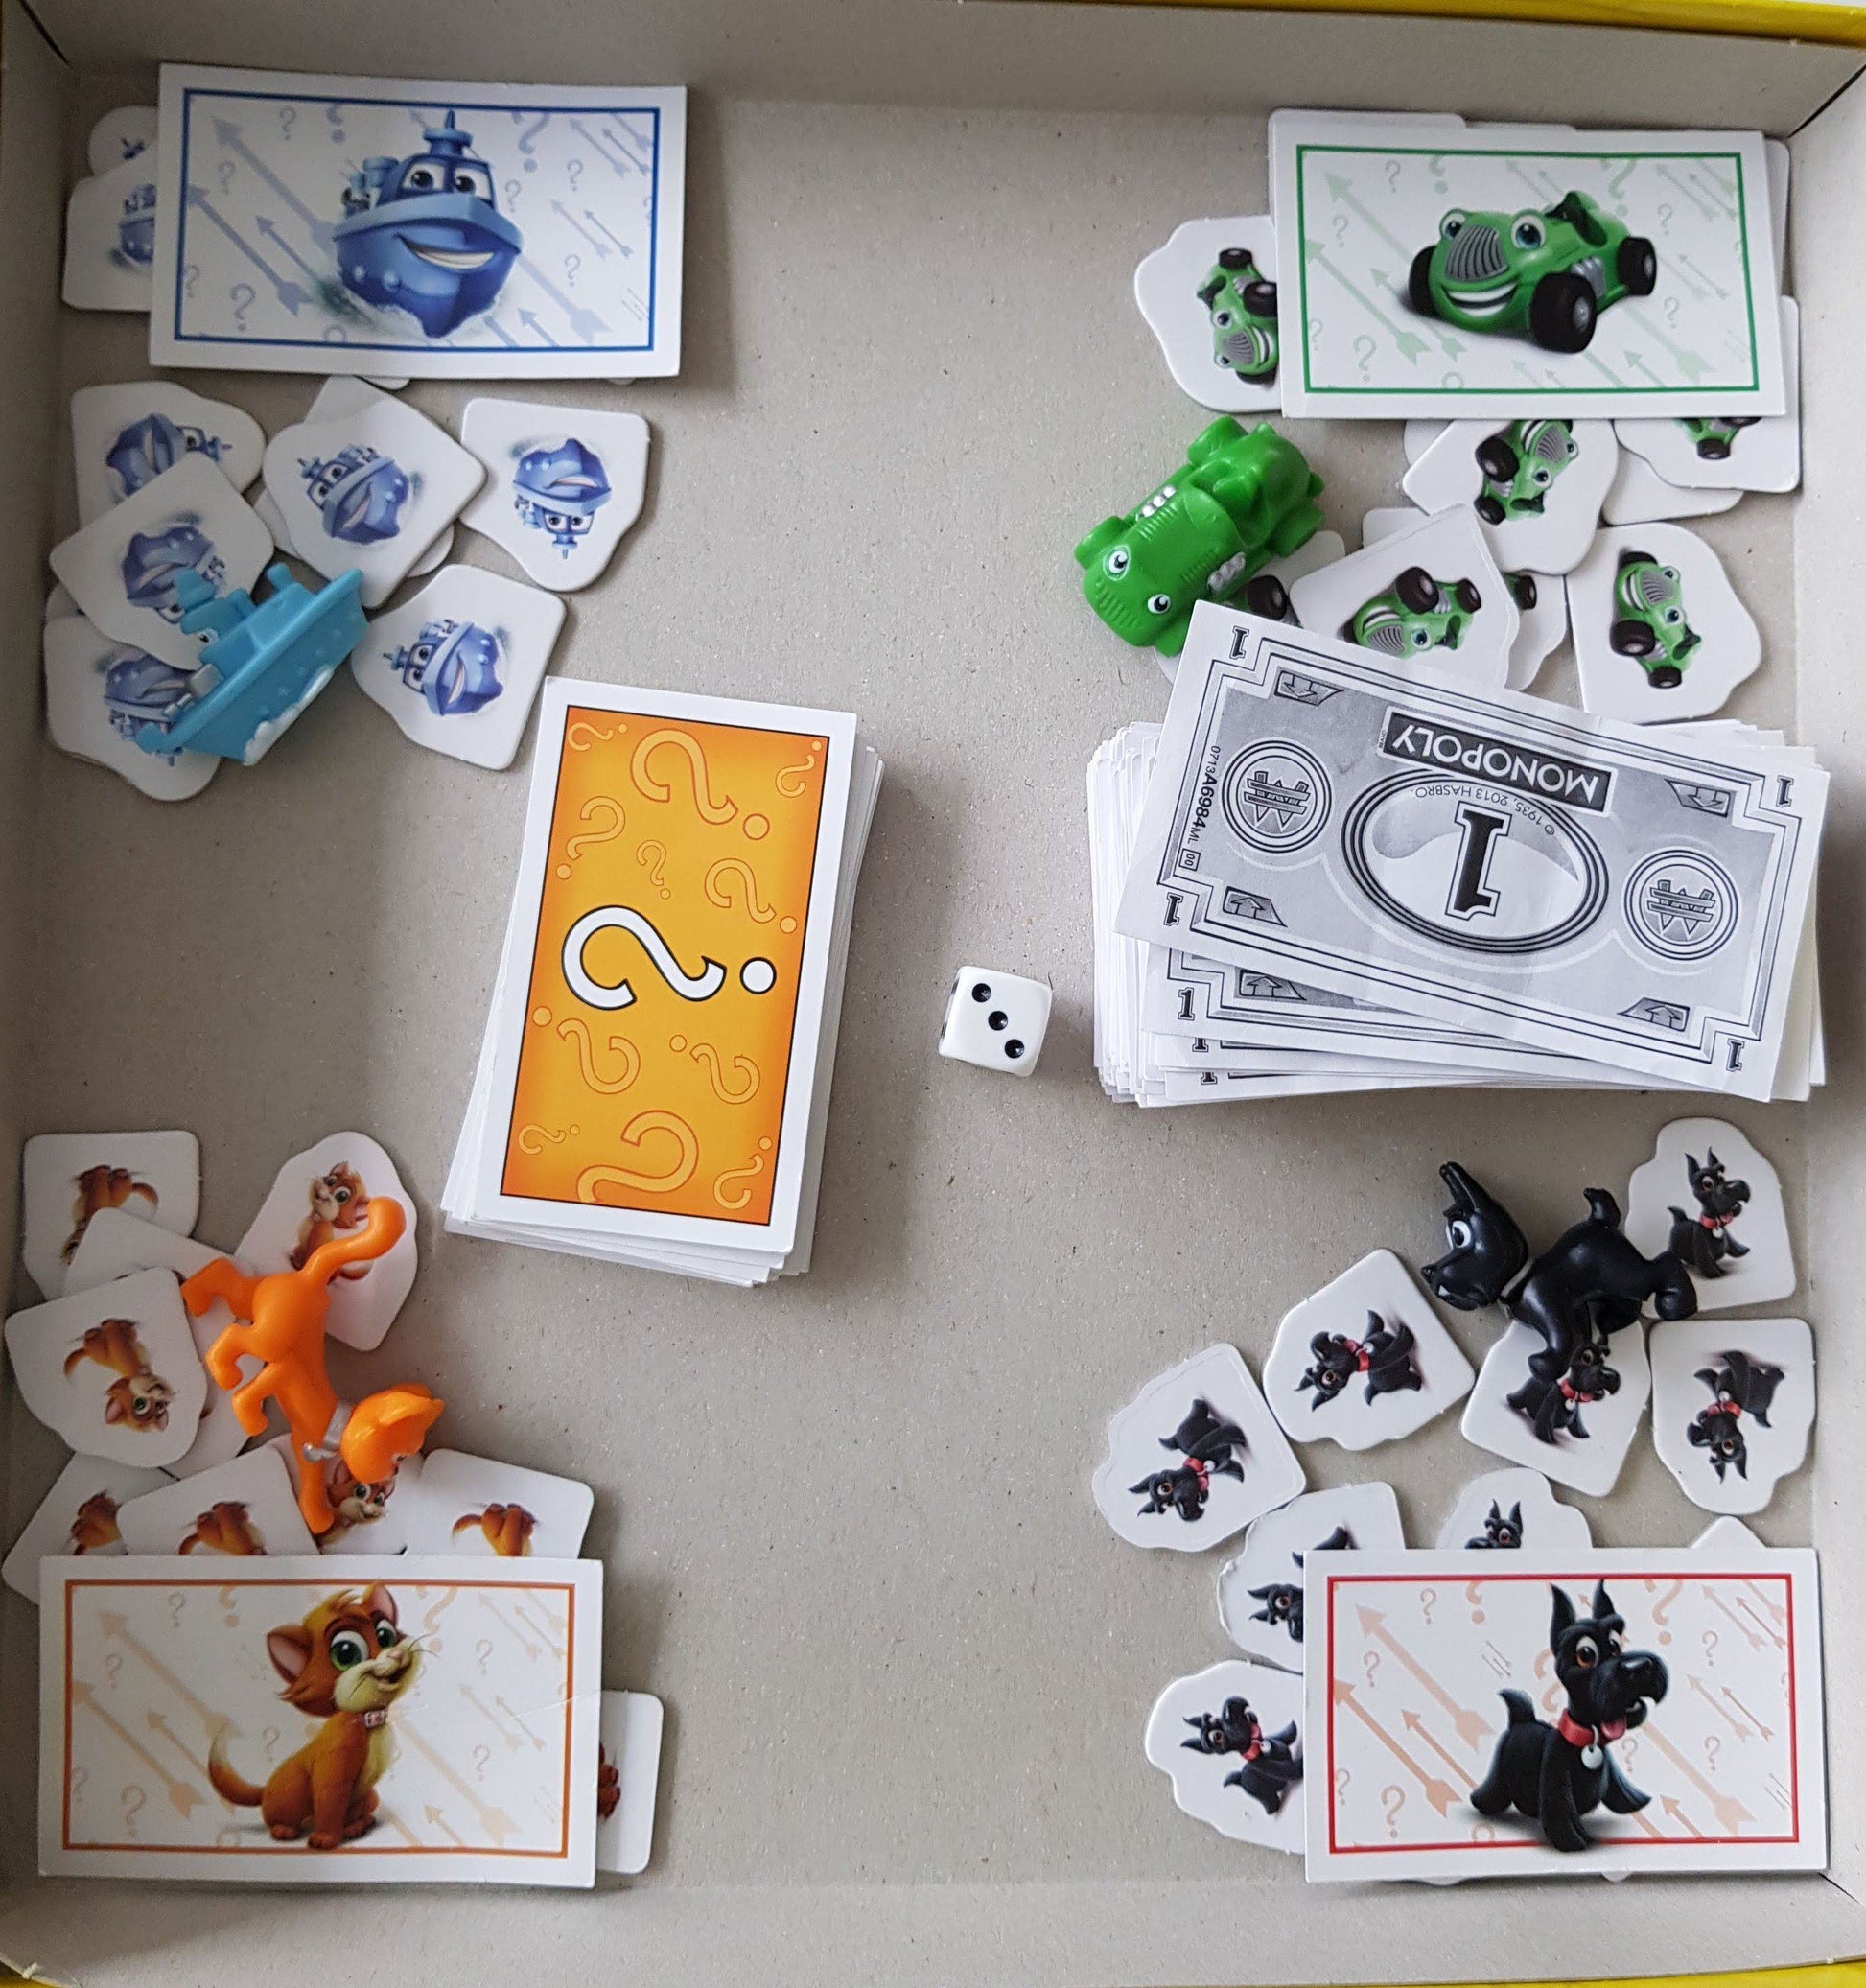 Monopoly Very Good, 5+ yrs Recuddles.ch  (6545528815801)